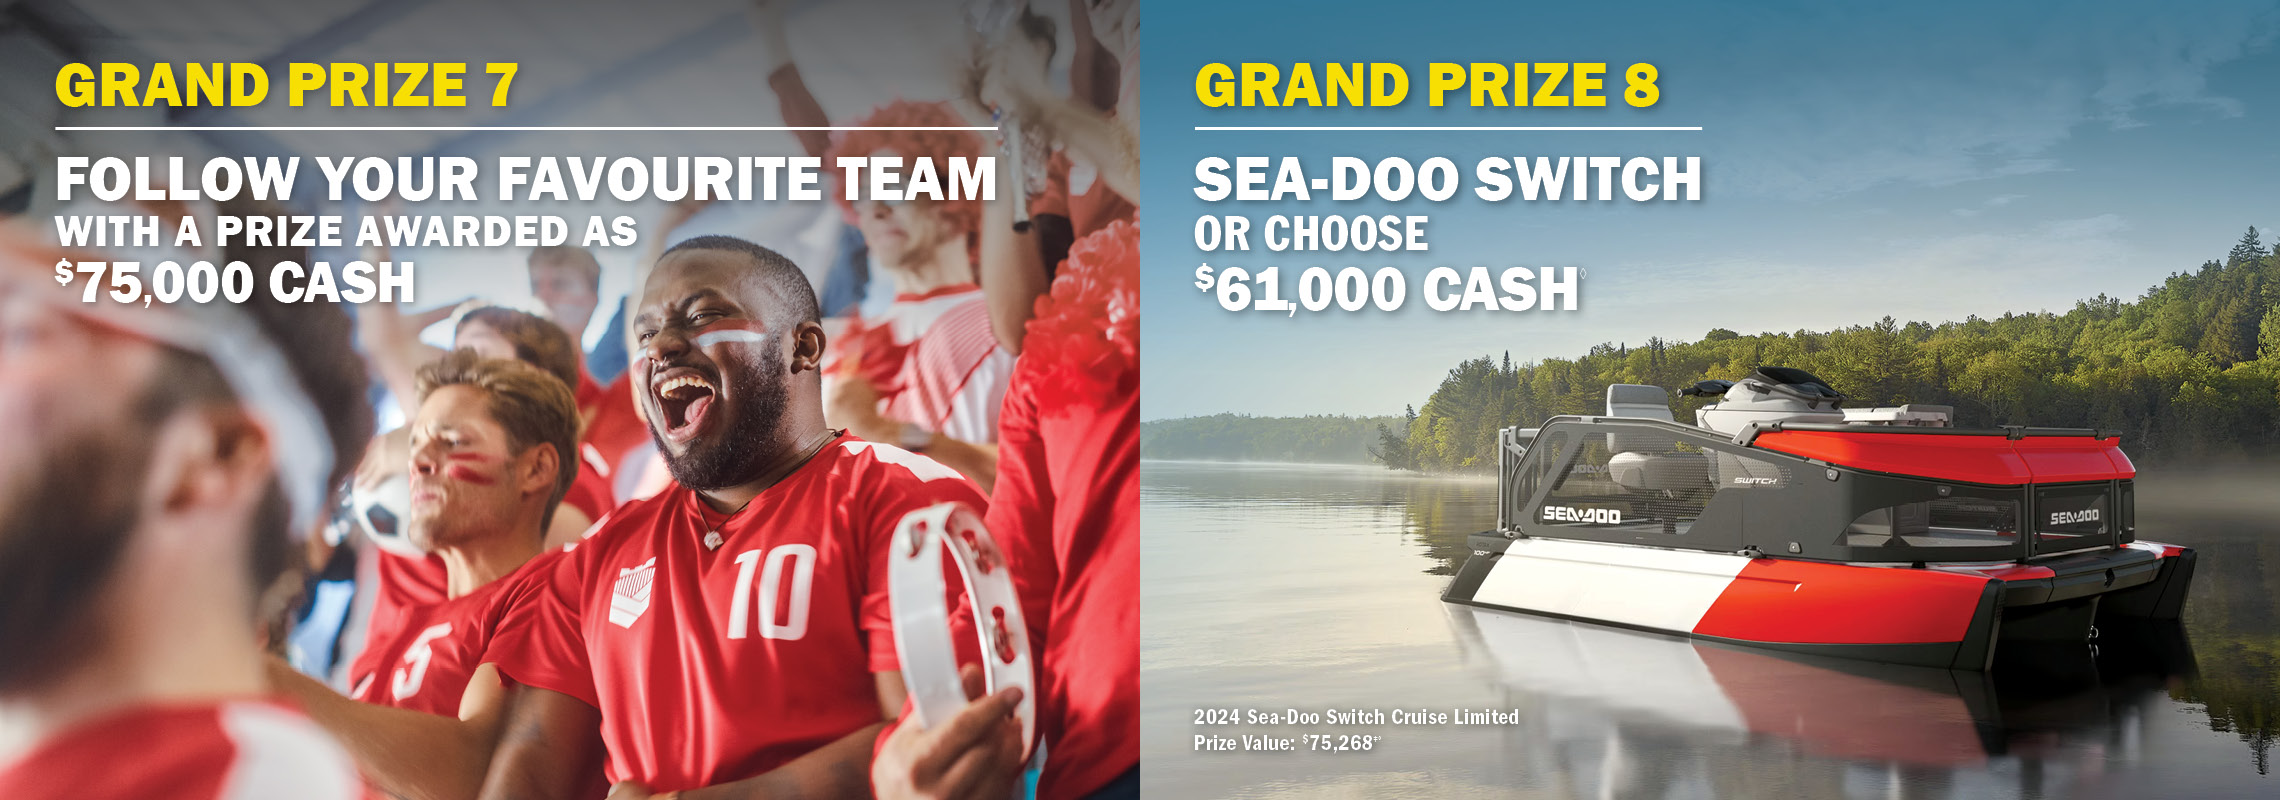 Grand Prize 7 - Golf getaway awarded as $75,000 cash. Grand Prize 8 - BMW X4 xDrive 30i or $55,000 cash.